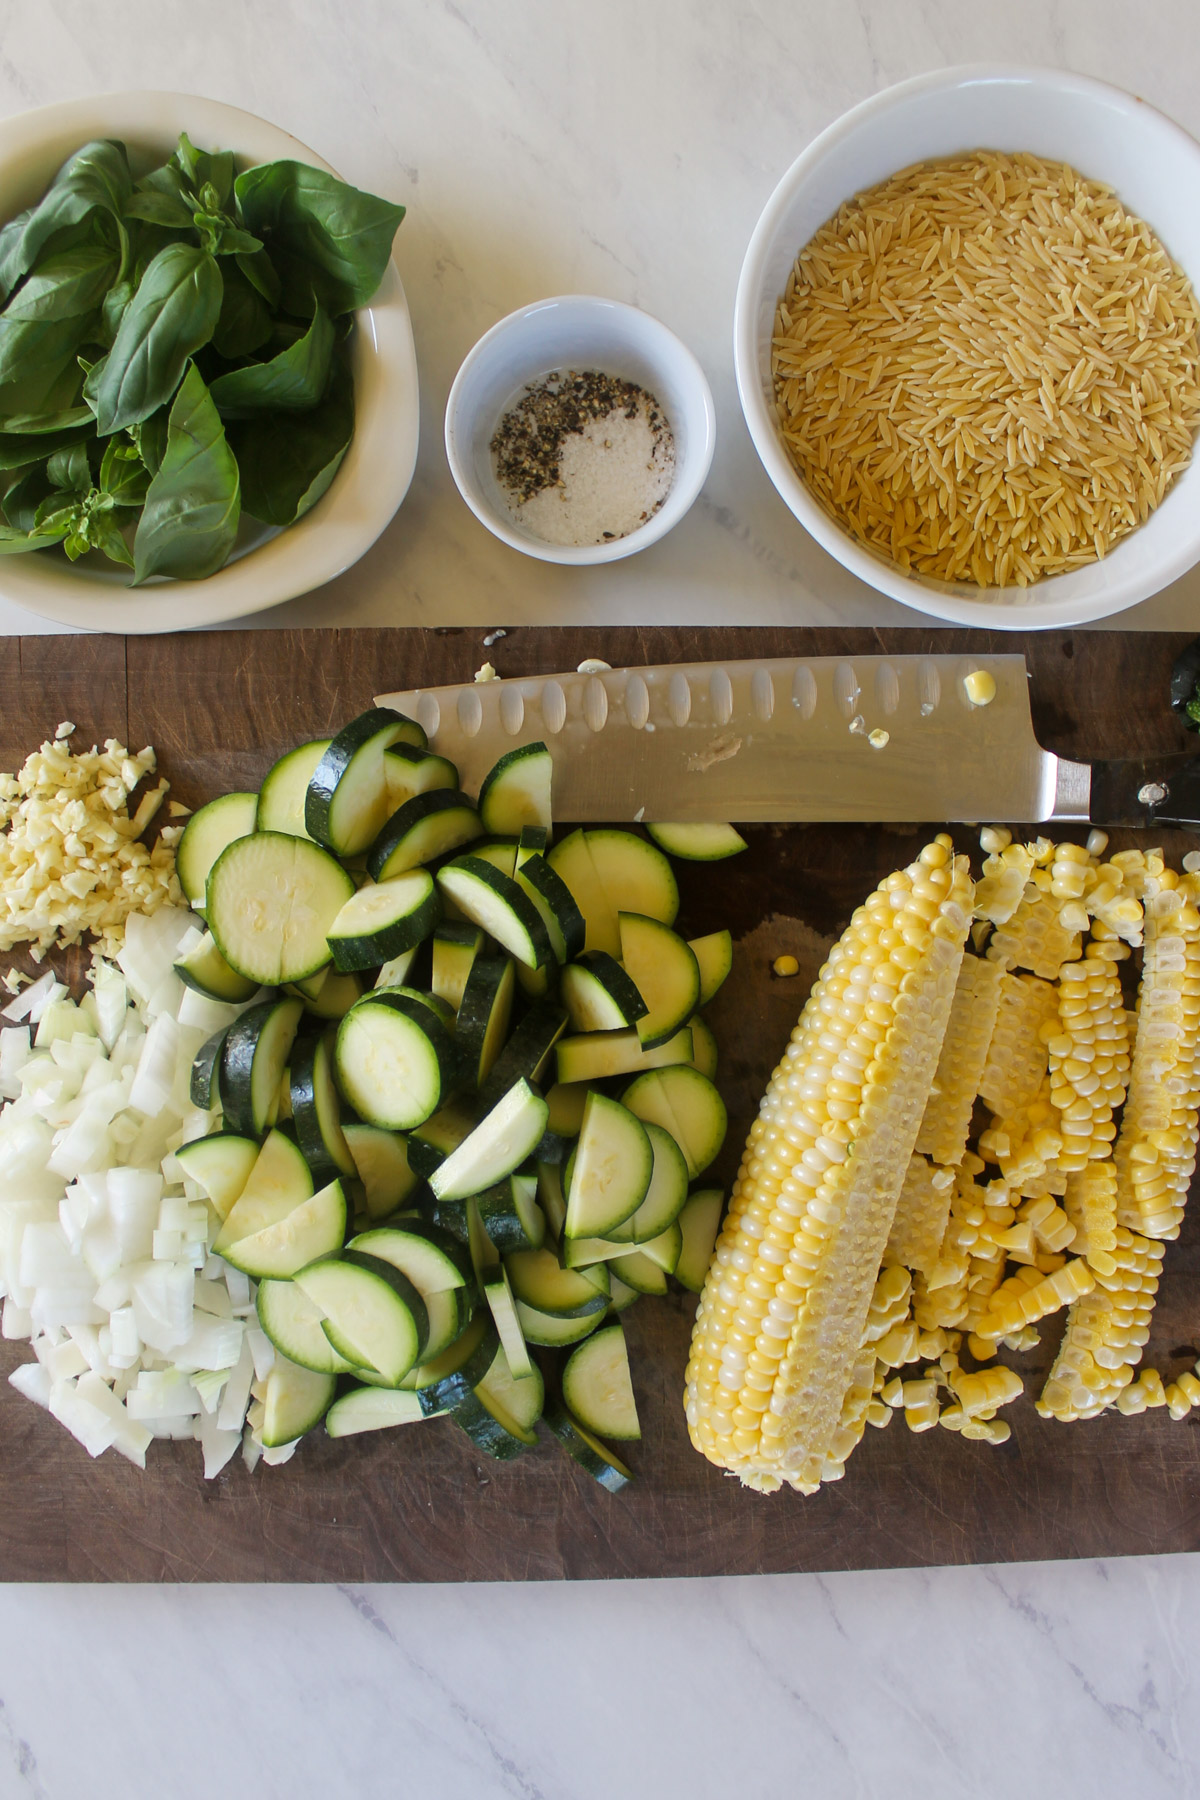 Chopped zucchini, onion, garlic, and corn cut off the cob on a cutting board.